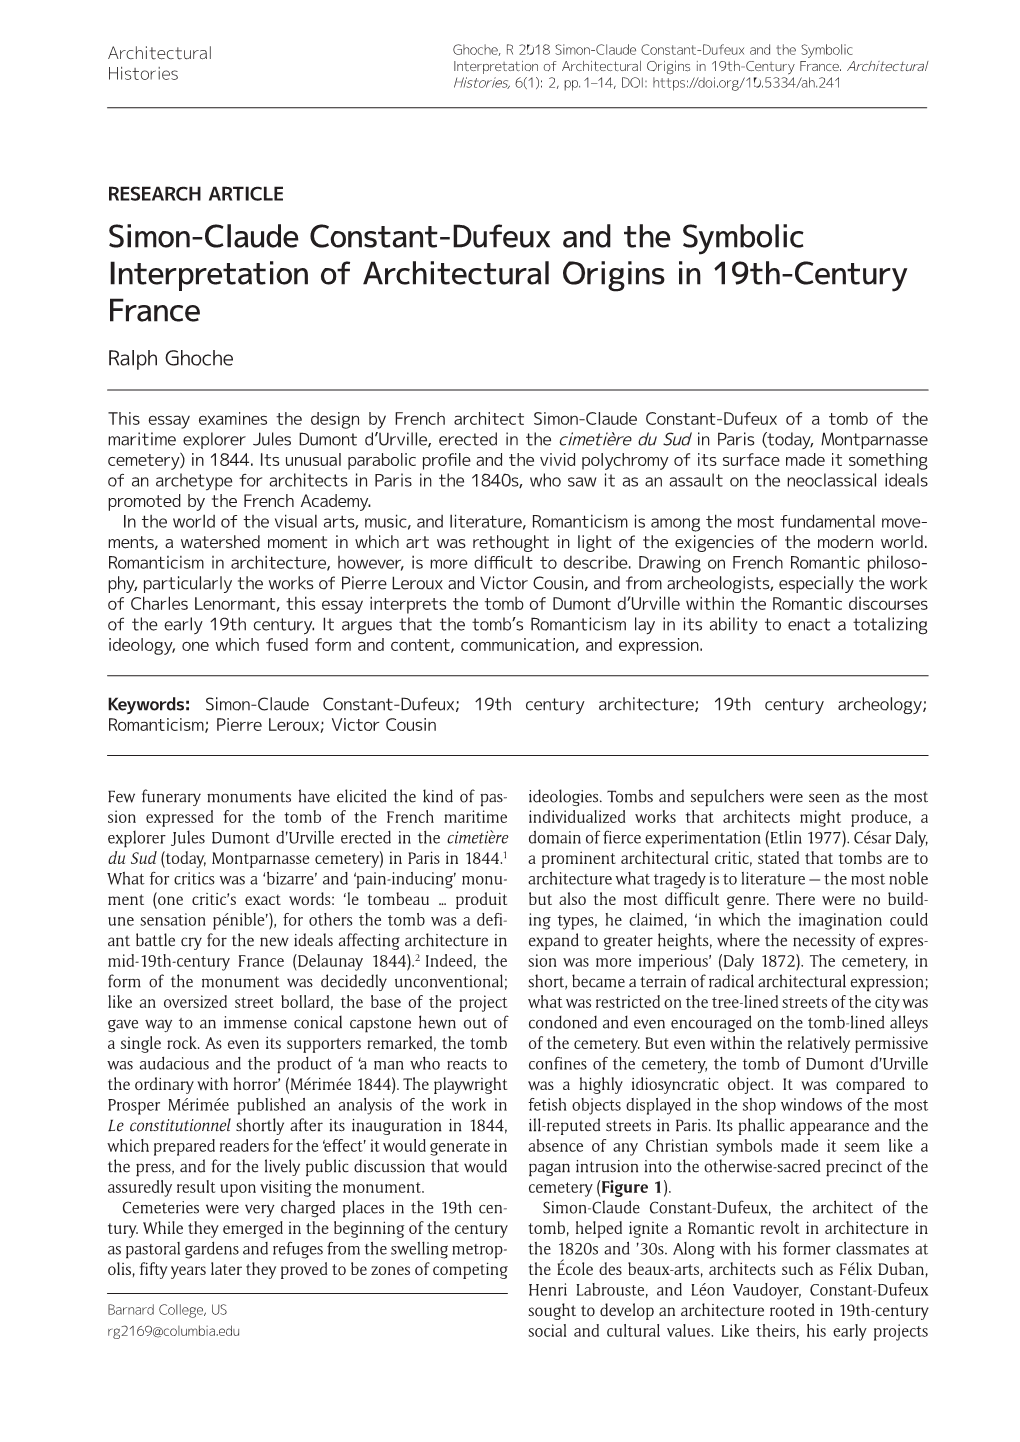 Simon-Claude Constant-Dufeux and the Symbolic Interpretation of Architectural Origins in 19Th-Century France